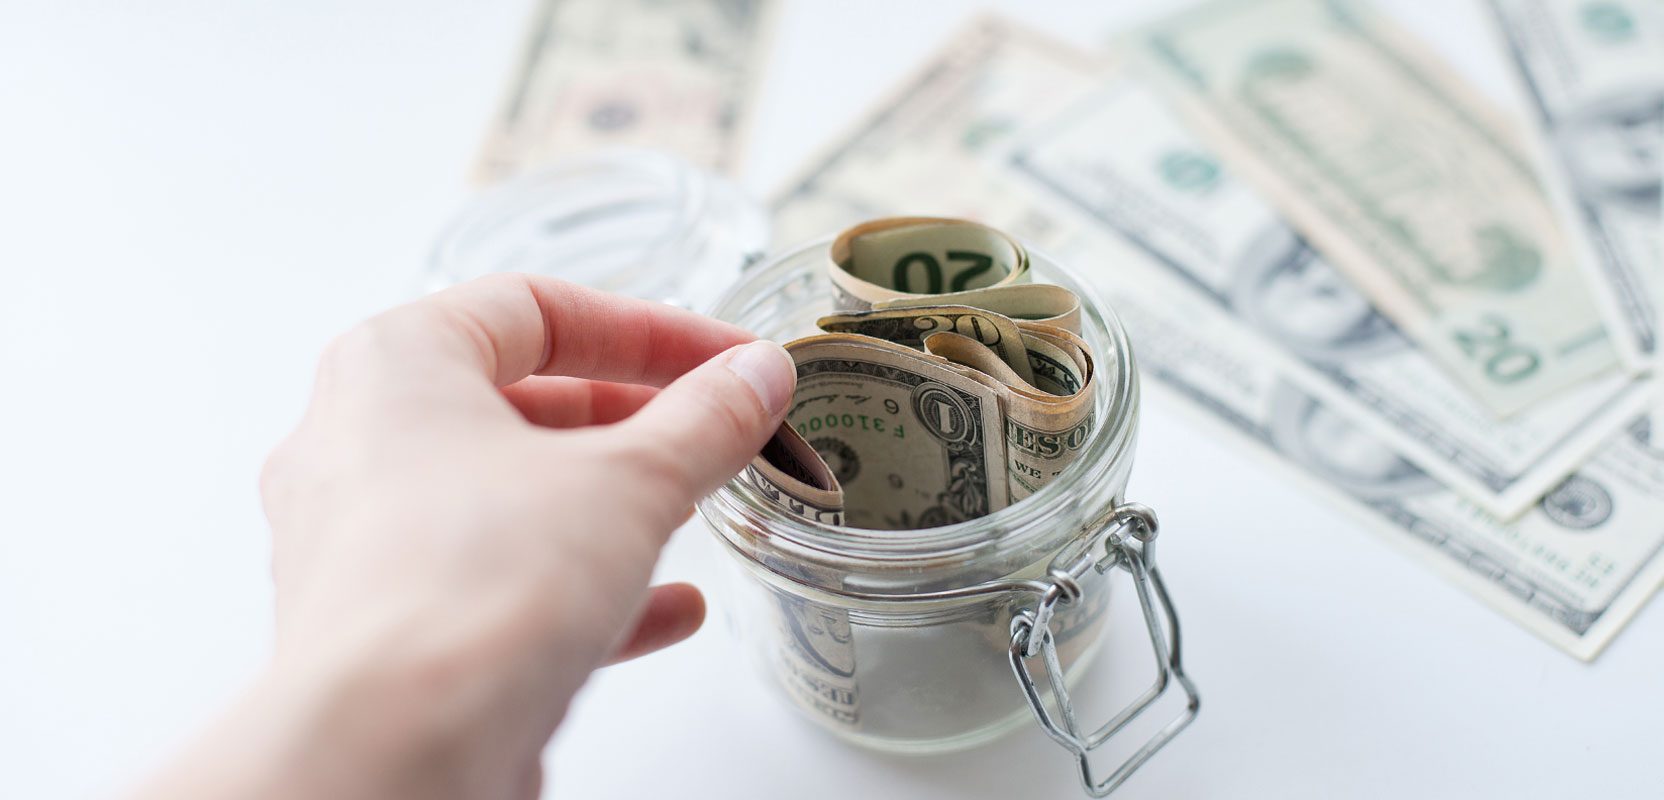 Uber tip money in a glass jar